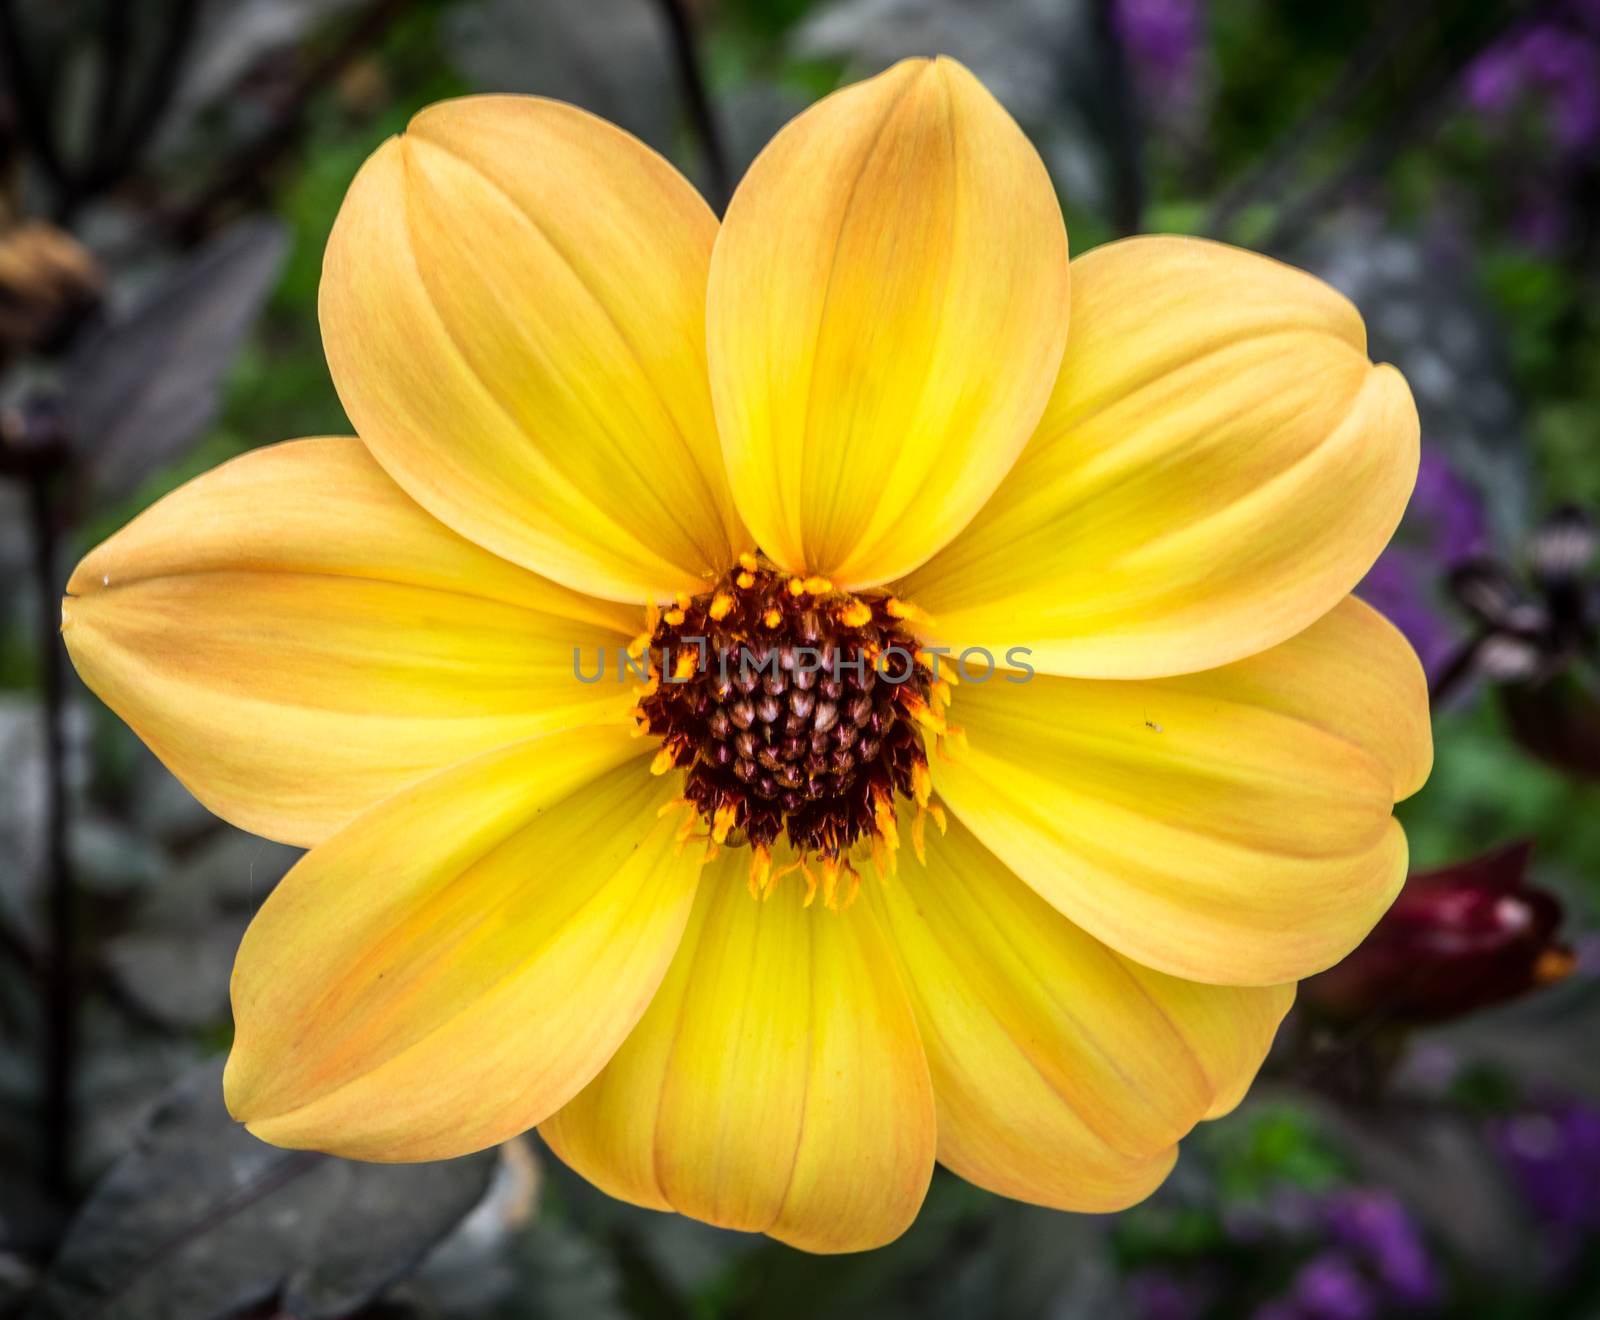 A Yellow flower macro closeup with dark center